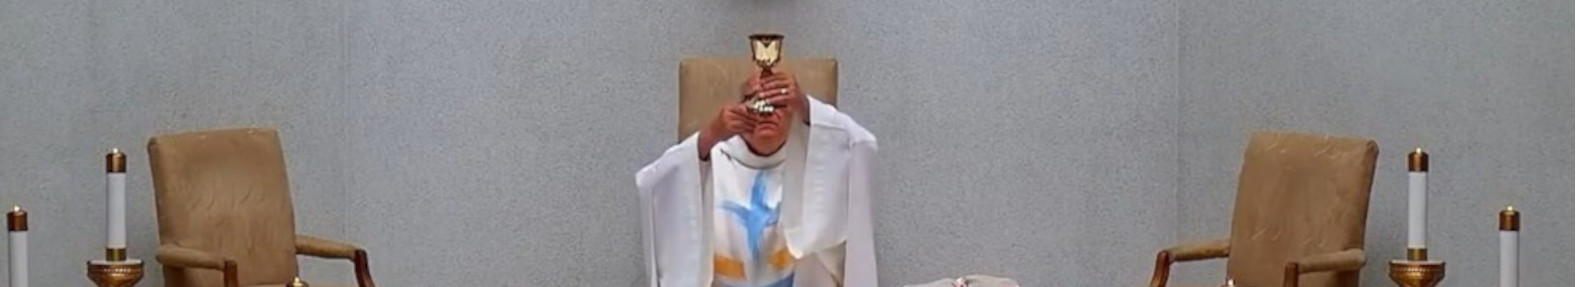 Fr. Phil Elevating Chalice